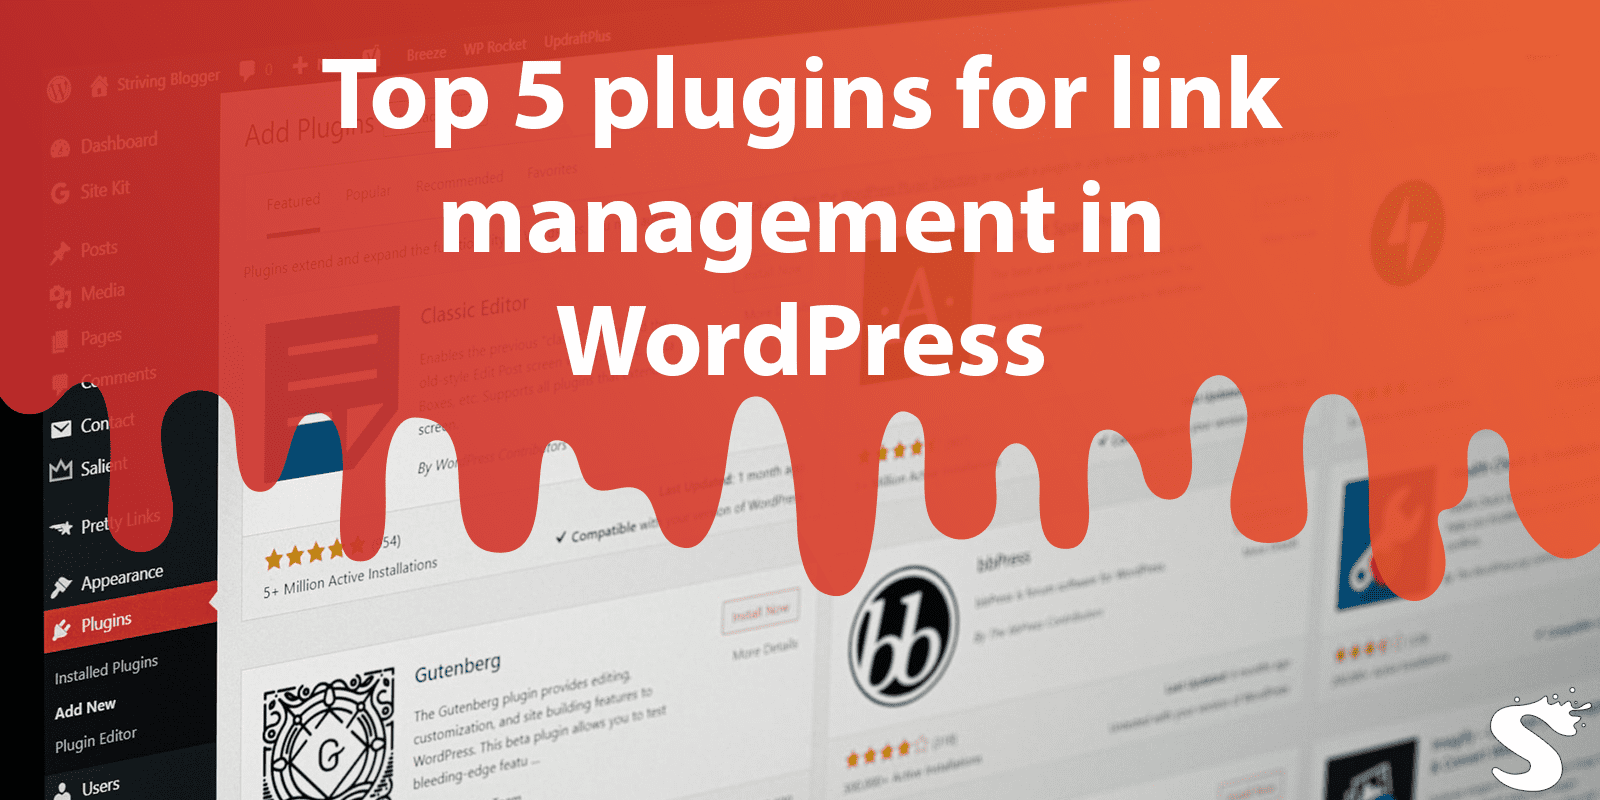 Top 5 plugins for link management in WordPress